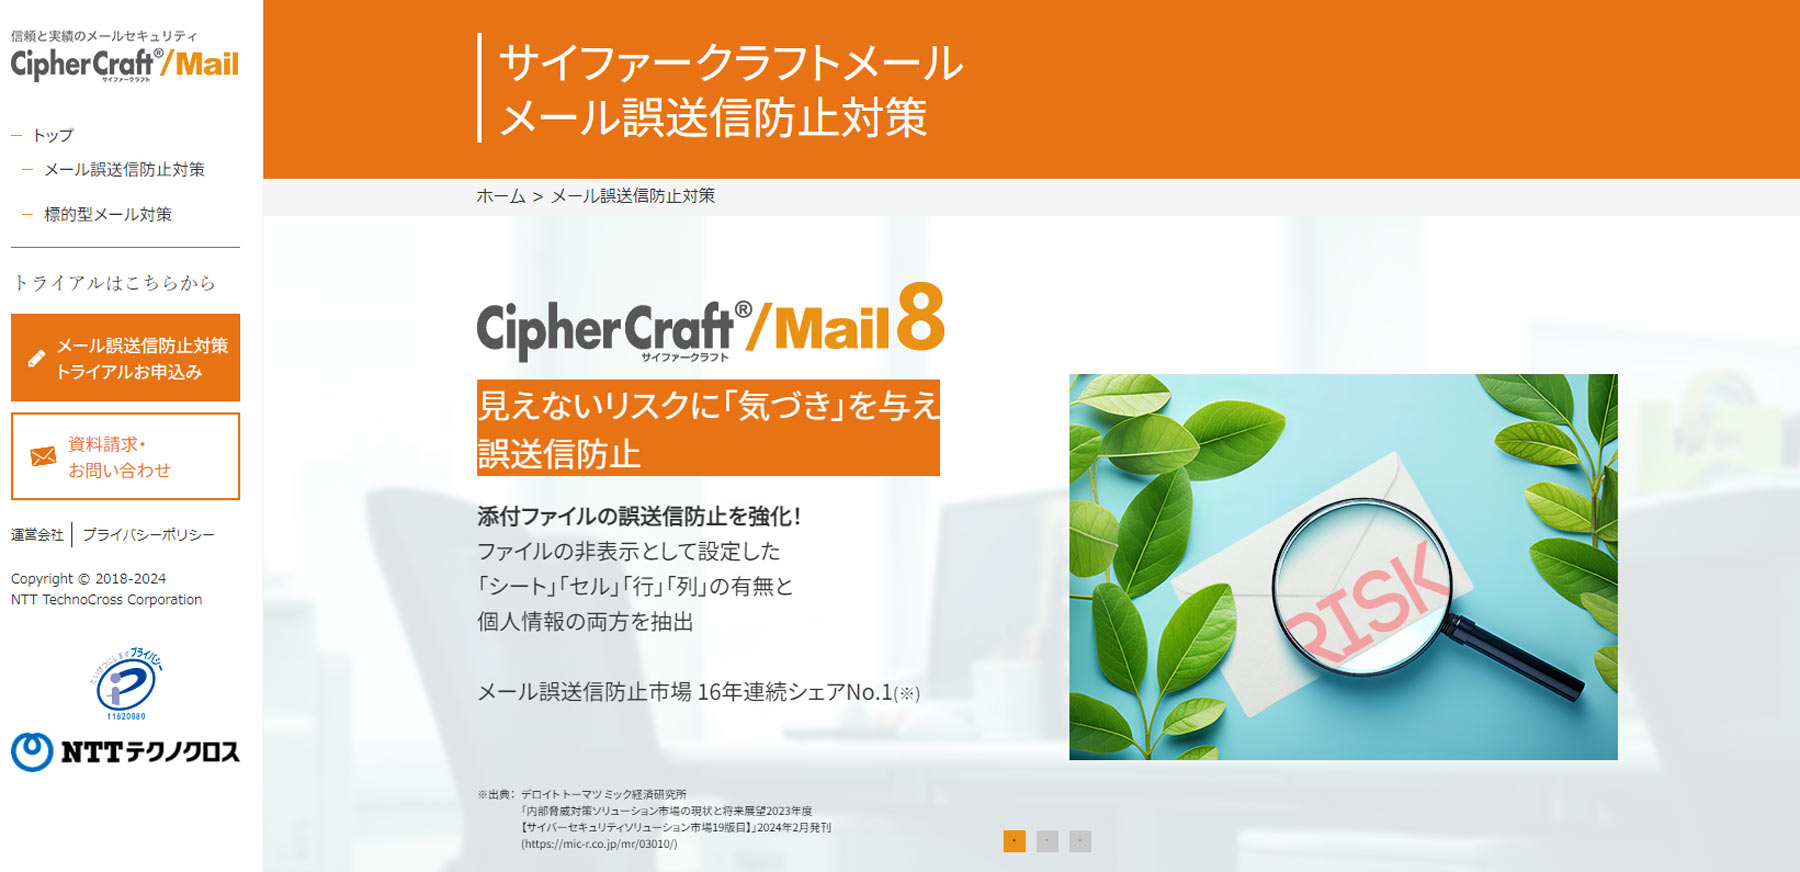 CipherCraft/Mail 8公式Webサイト